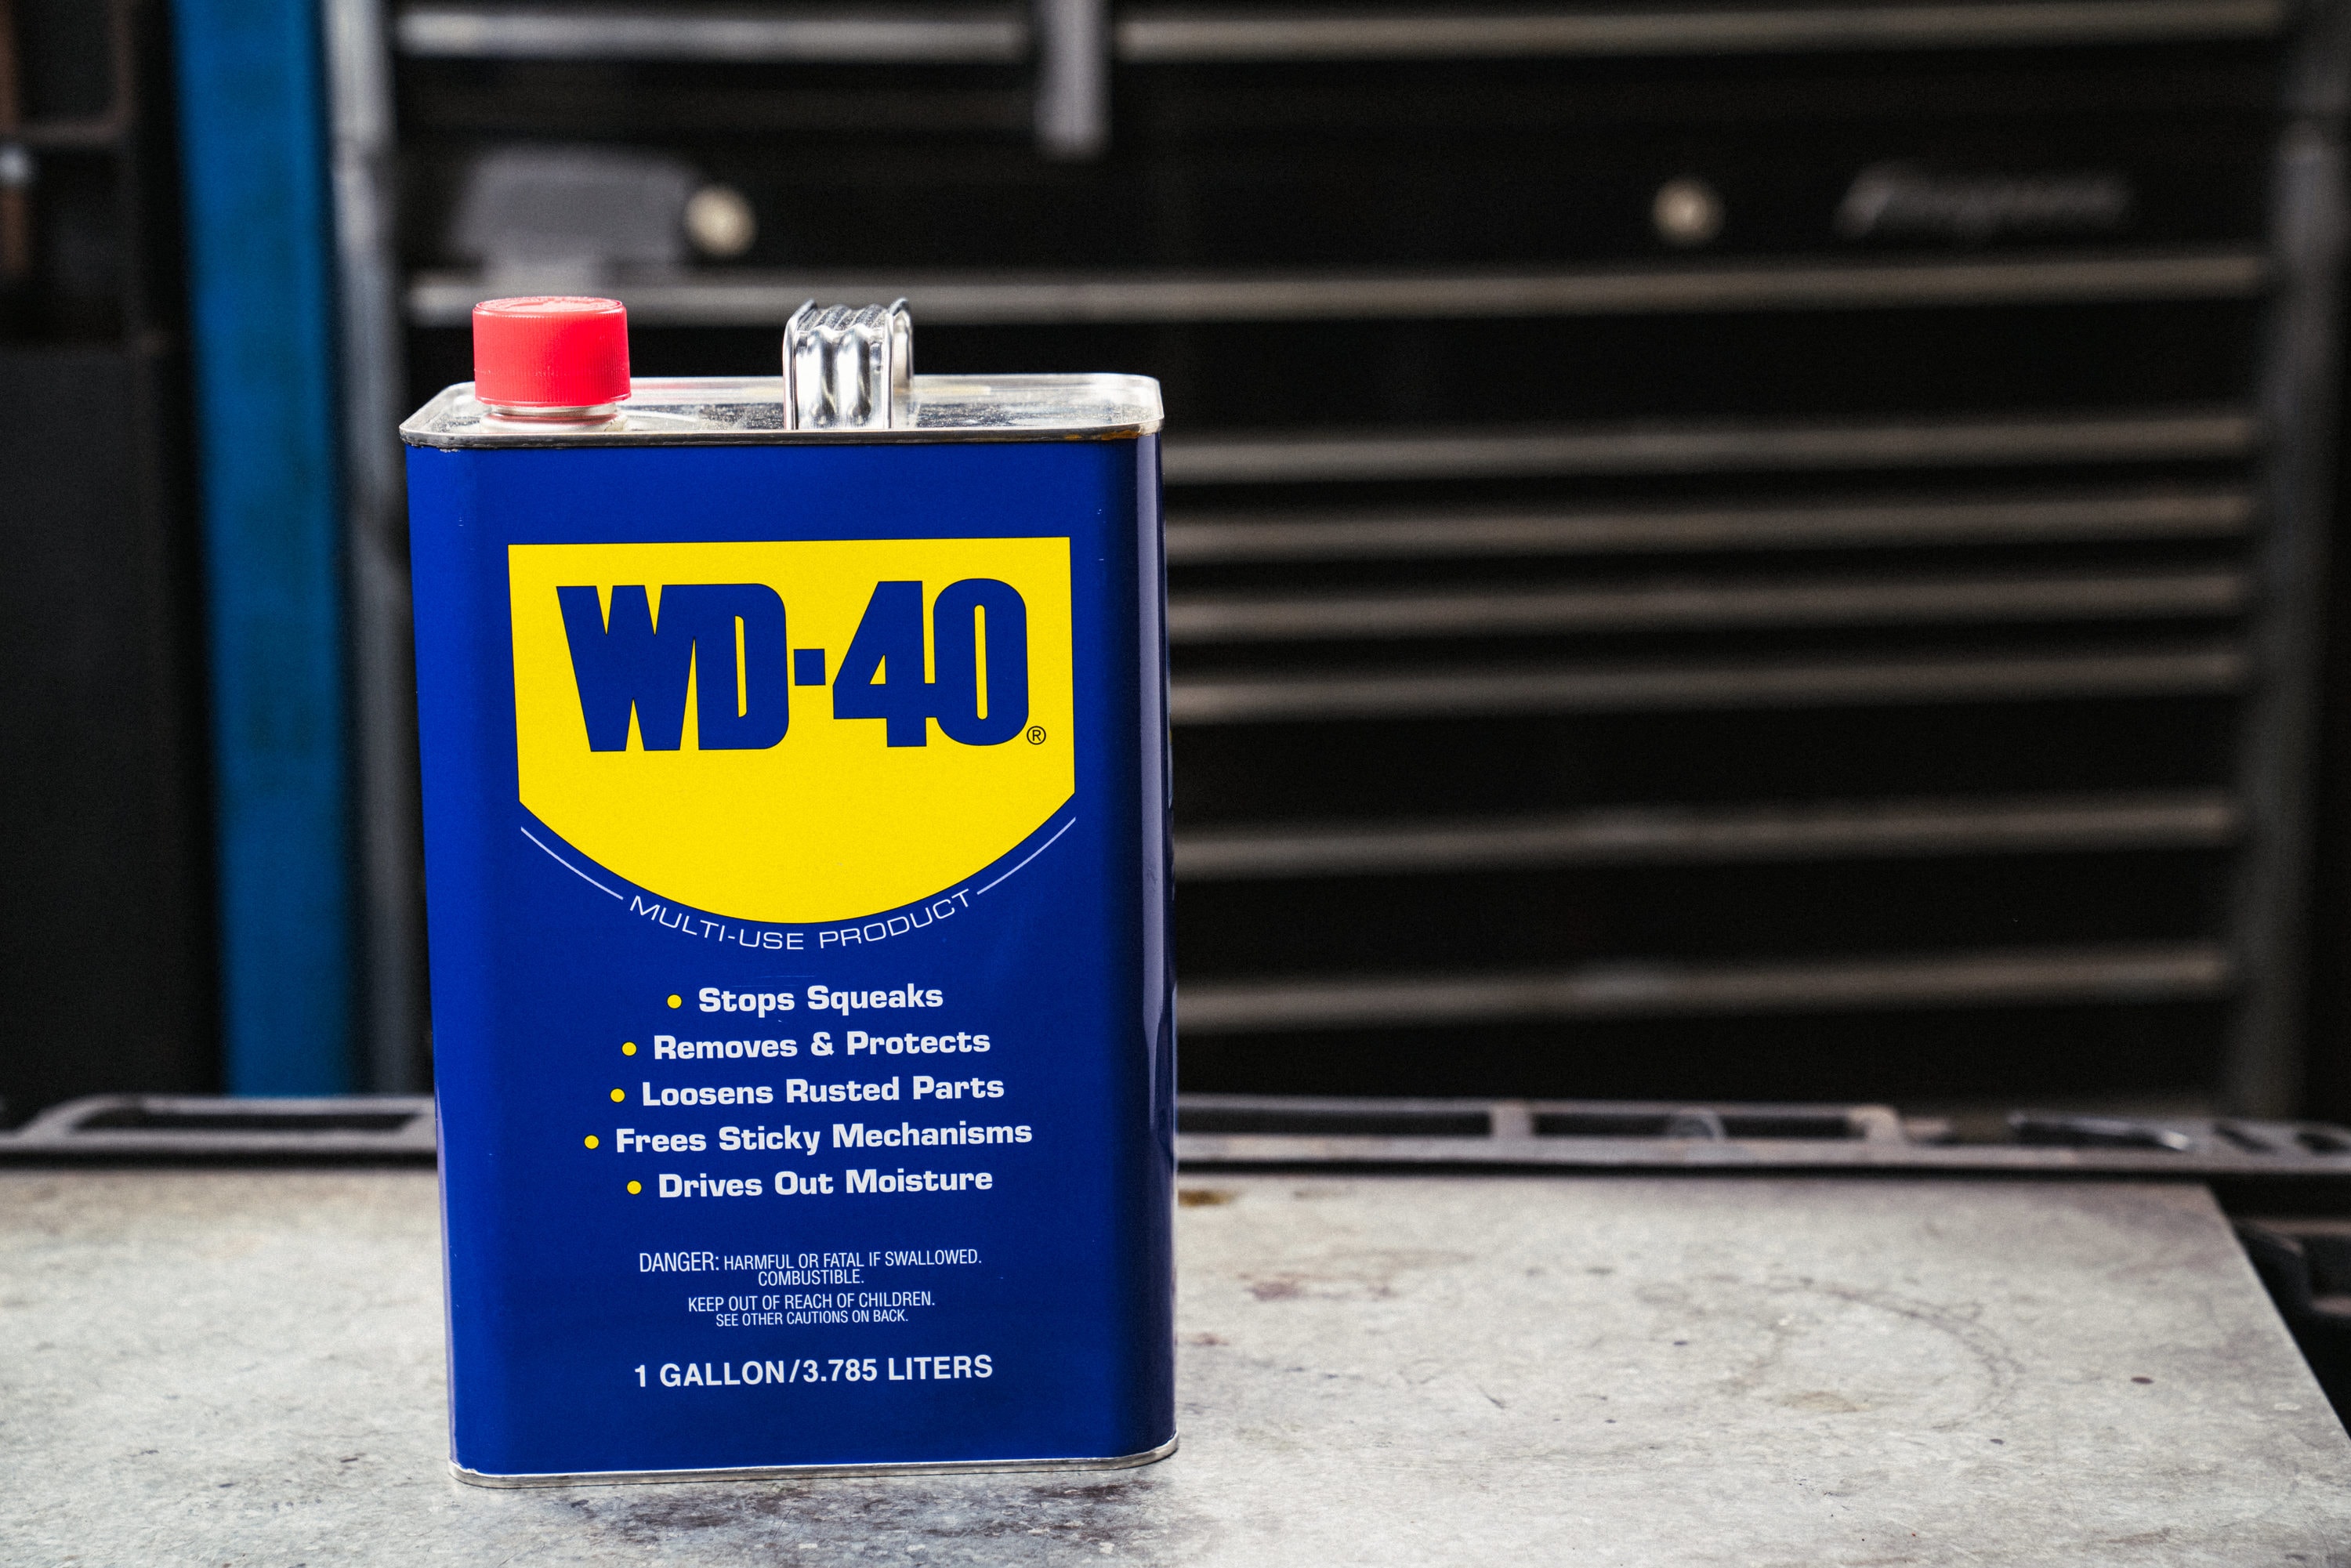 WD-40 Original WD-40 Formula, Multi-Purpose Lubricant 8-fl oz